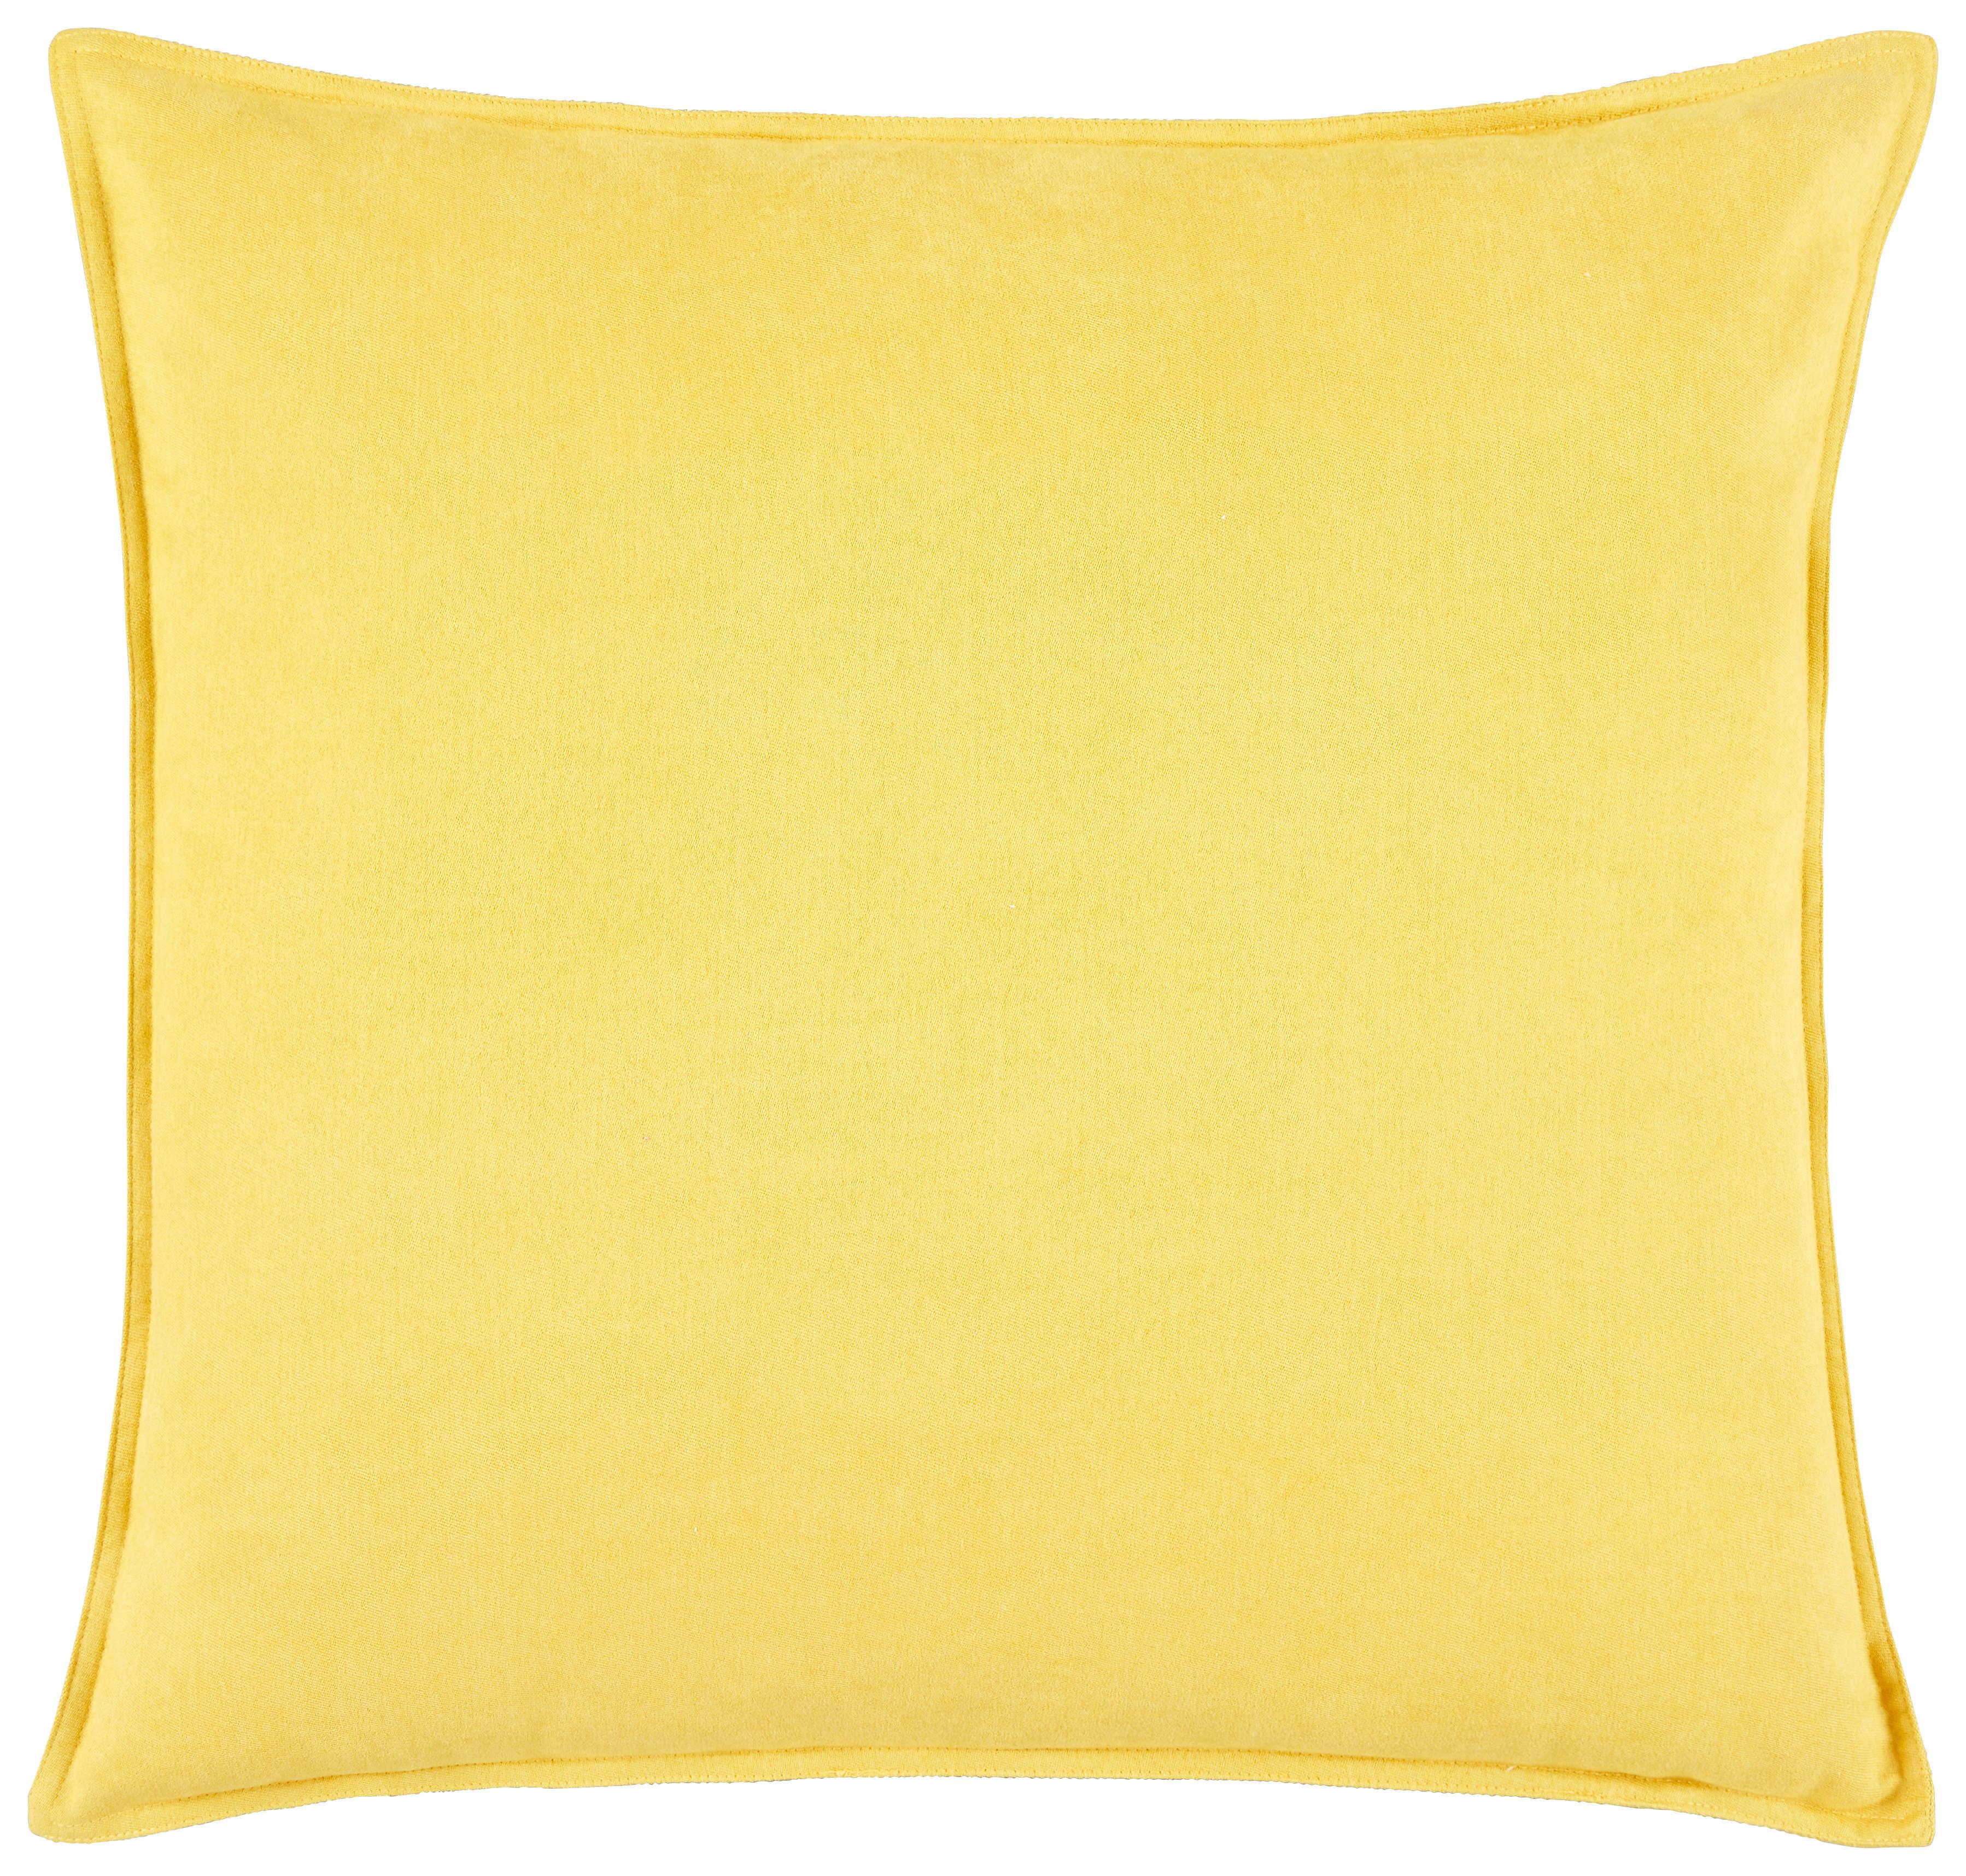 Polštář Ozdobný Nizza Žlutá, 60/60cm - žlutá, textil (60/60cm) - Modern Living